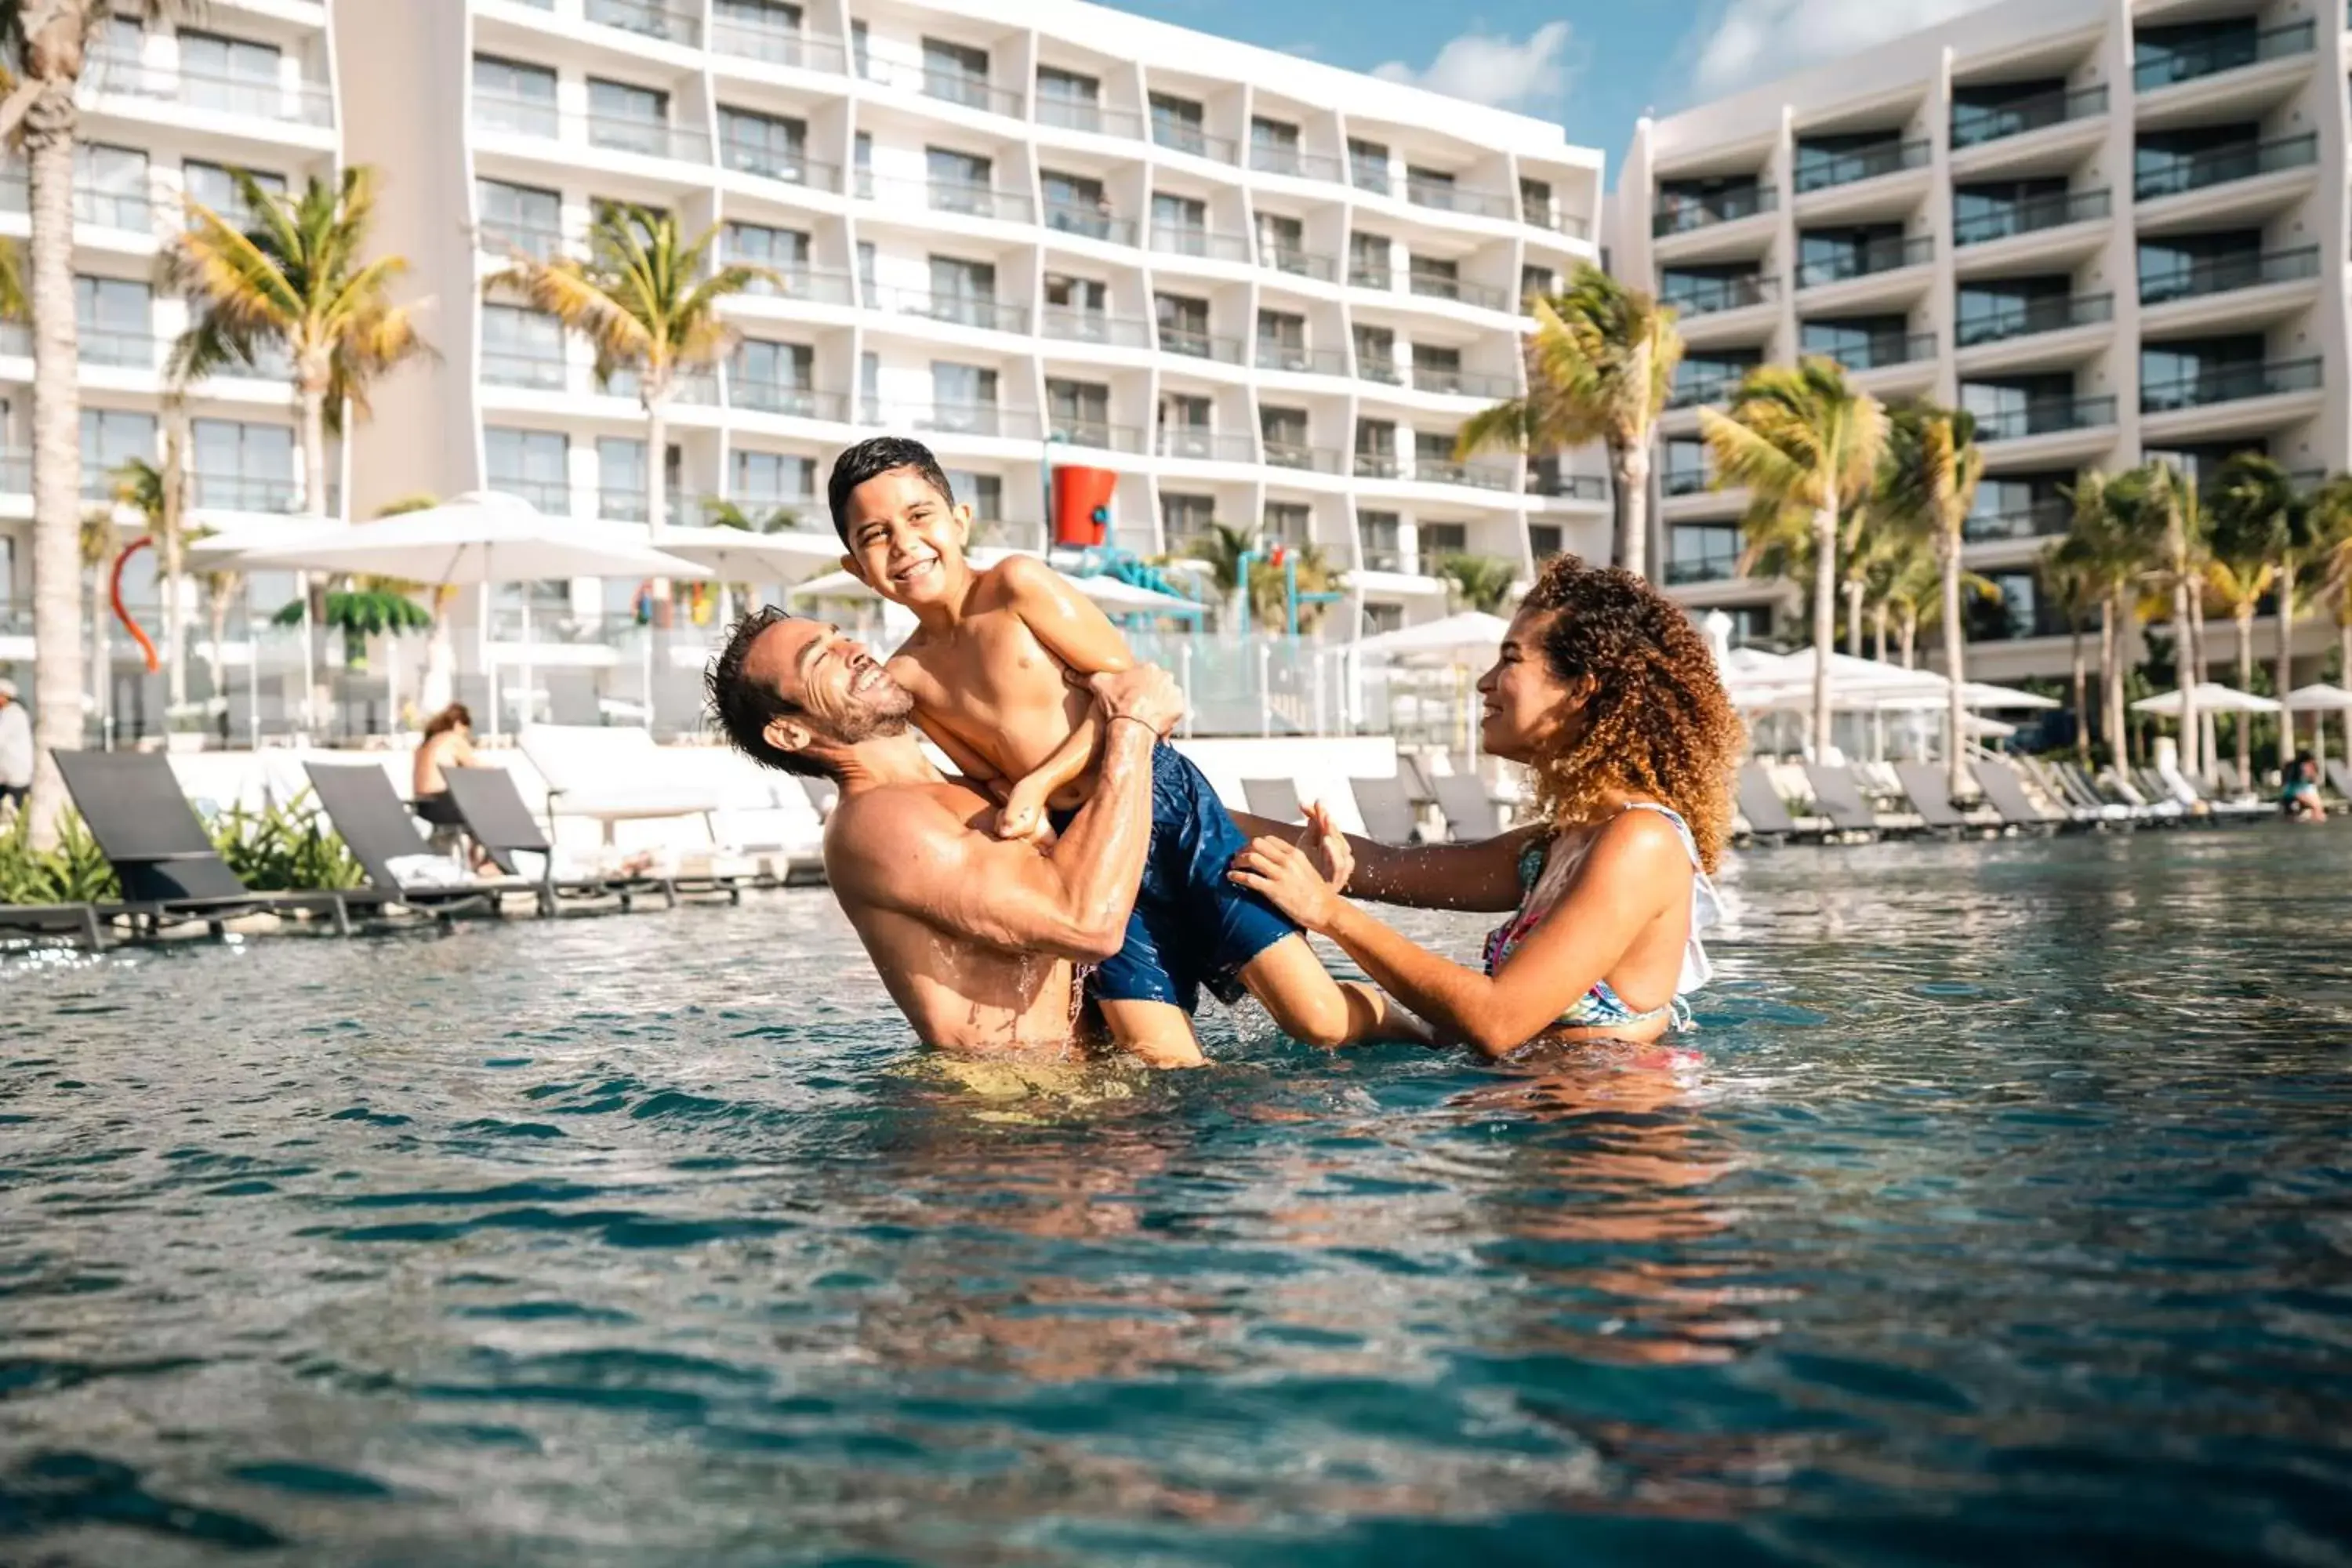 Pool view, Swimming Pool in Hilton Cancun, an All-Inclusive Resort